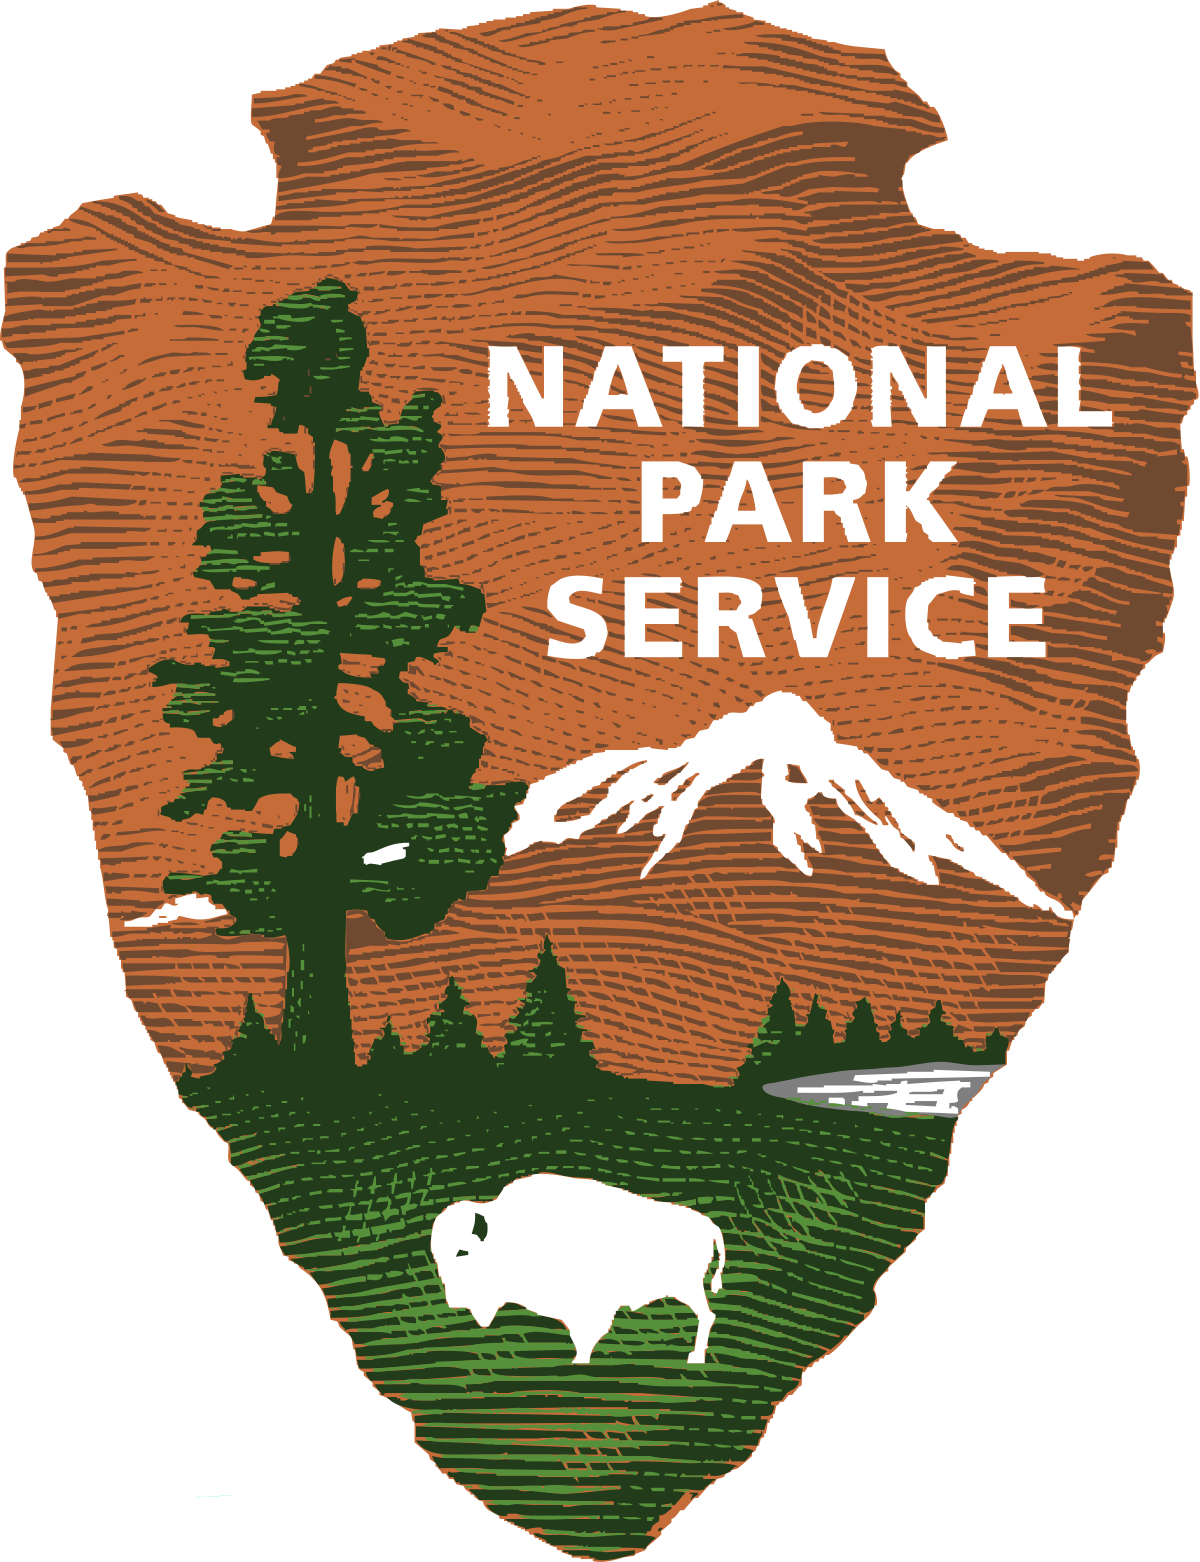 U.S. National Park Service logo